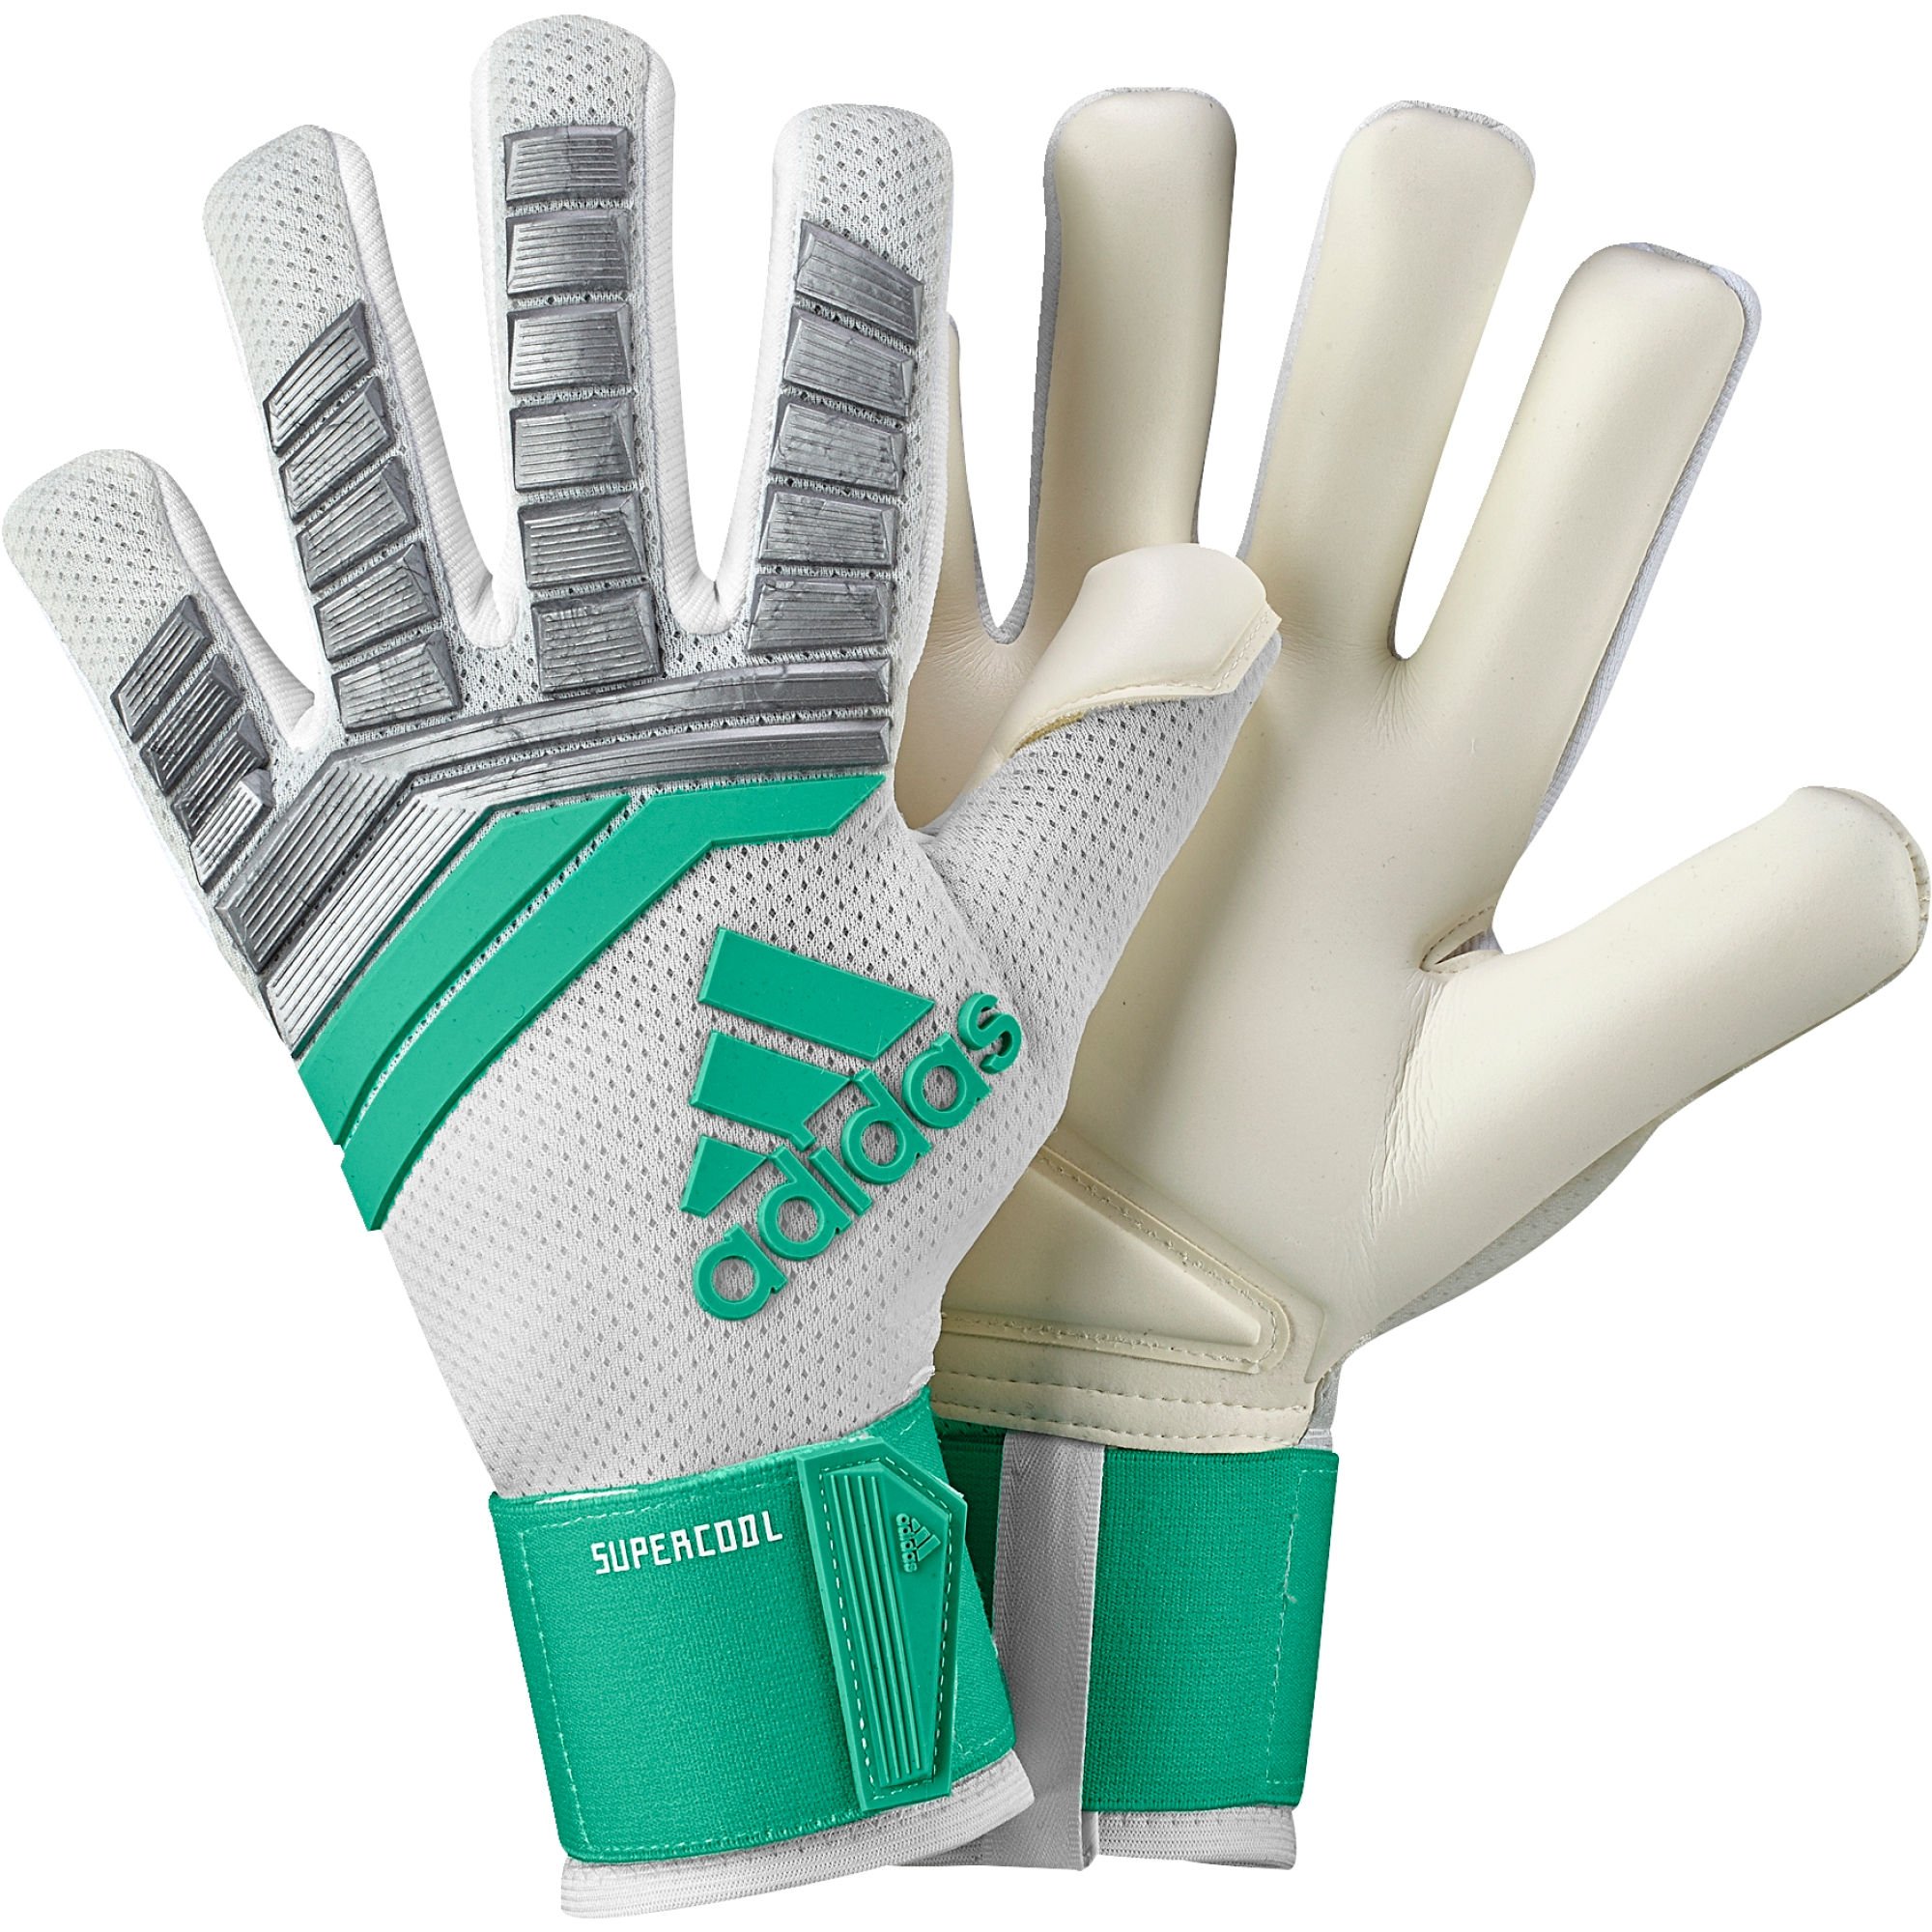 Goalkeeper's gloves adidas PRE Super 